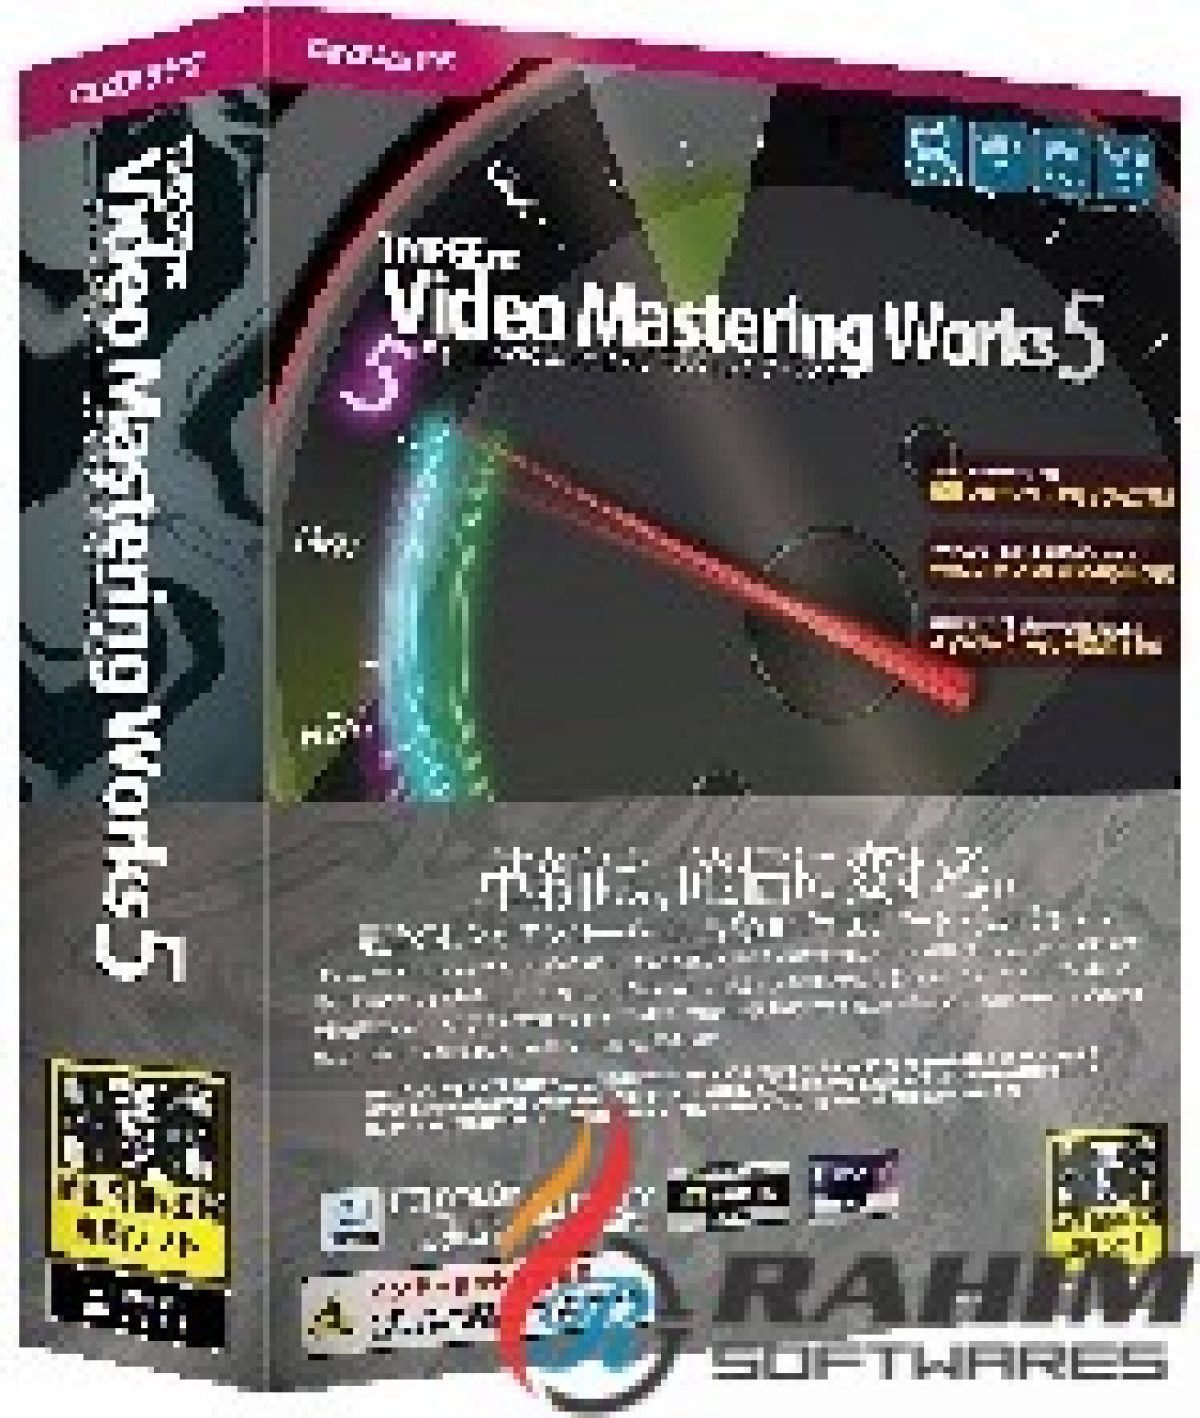 tmpgenc video mastering works 6 crack